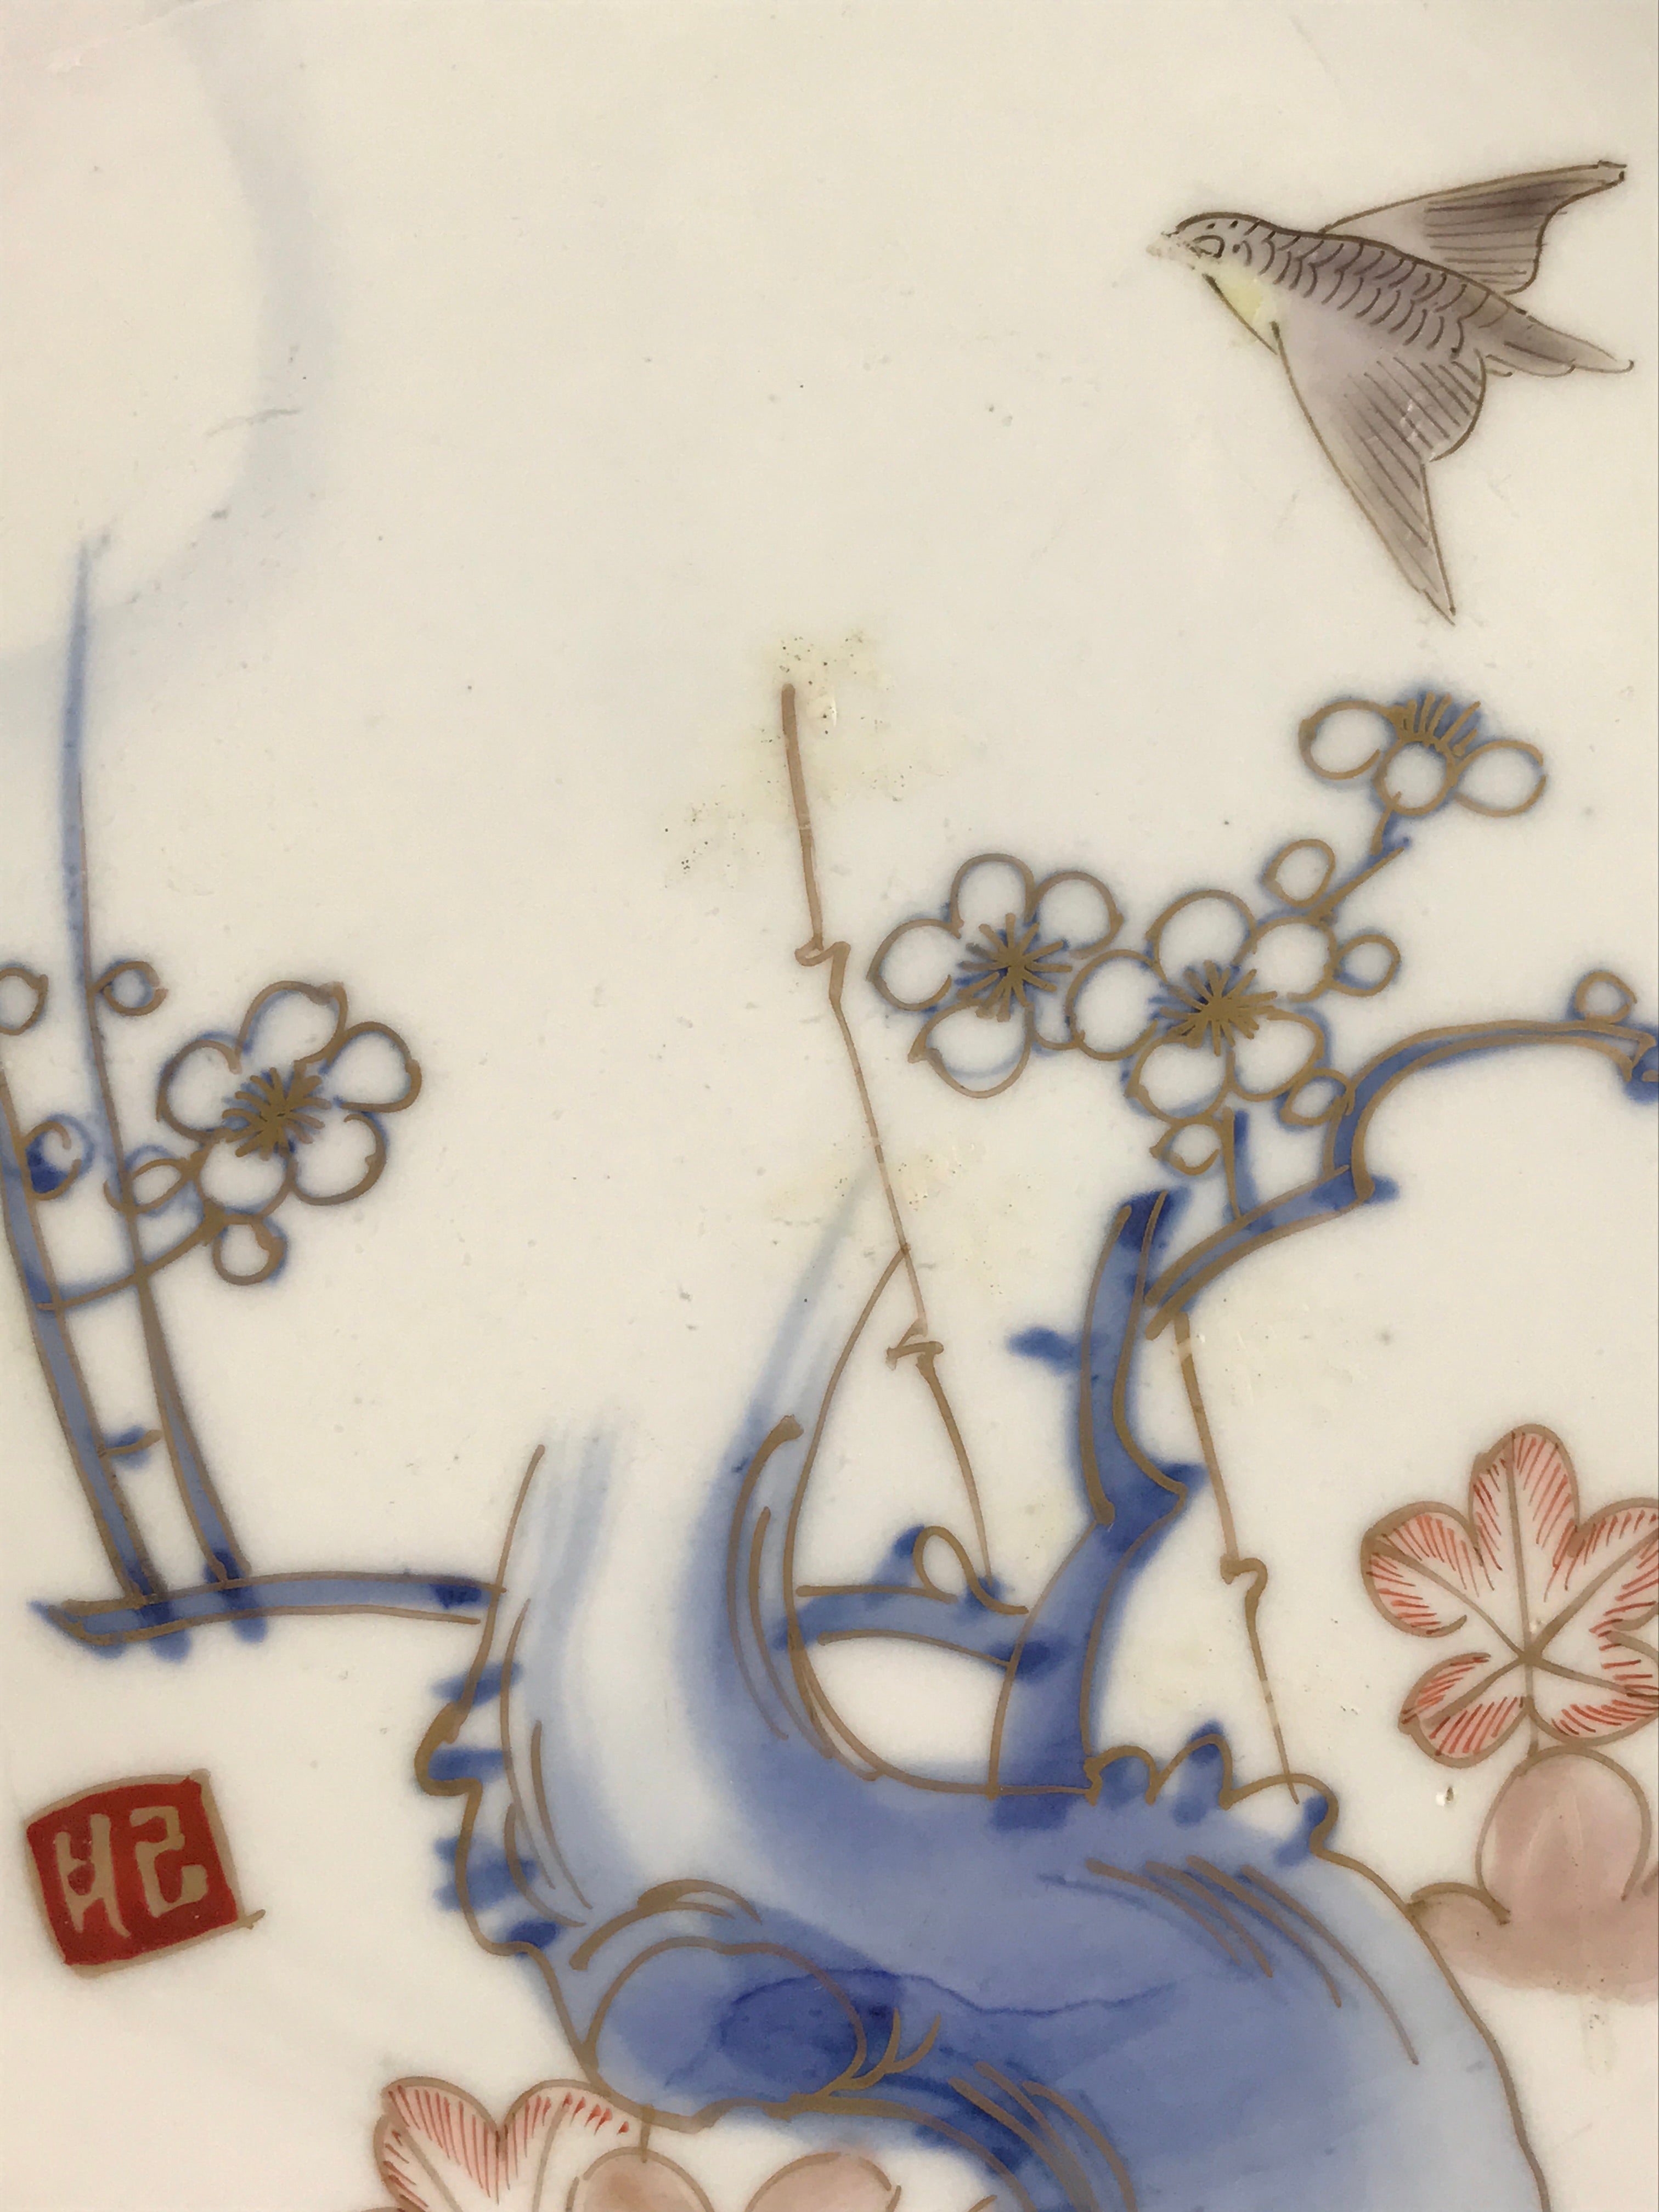 Antique Japanese Koimari Imari Plate Plum Blossom Nightingale Kozara Gold P373